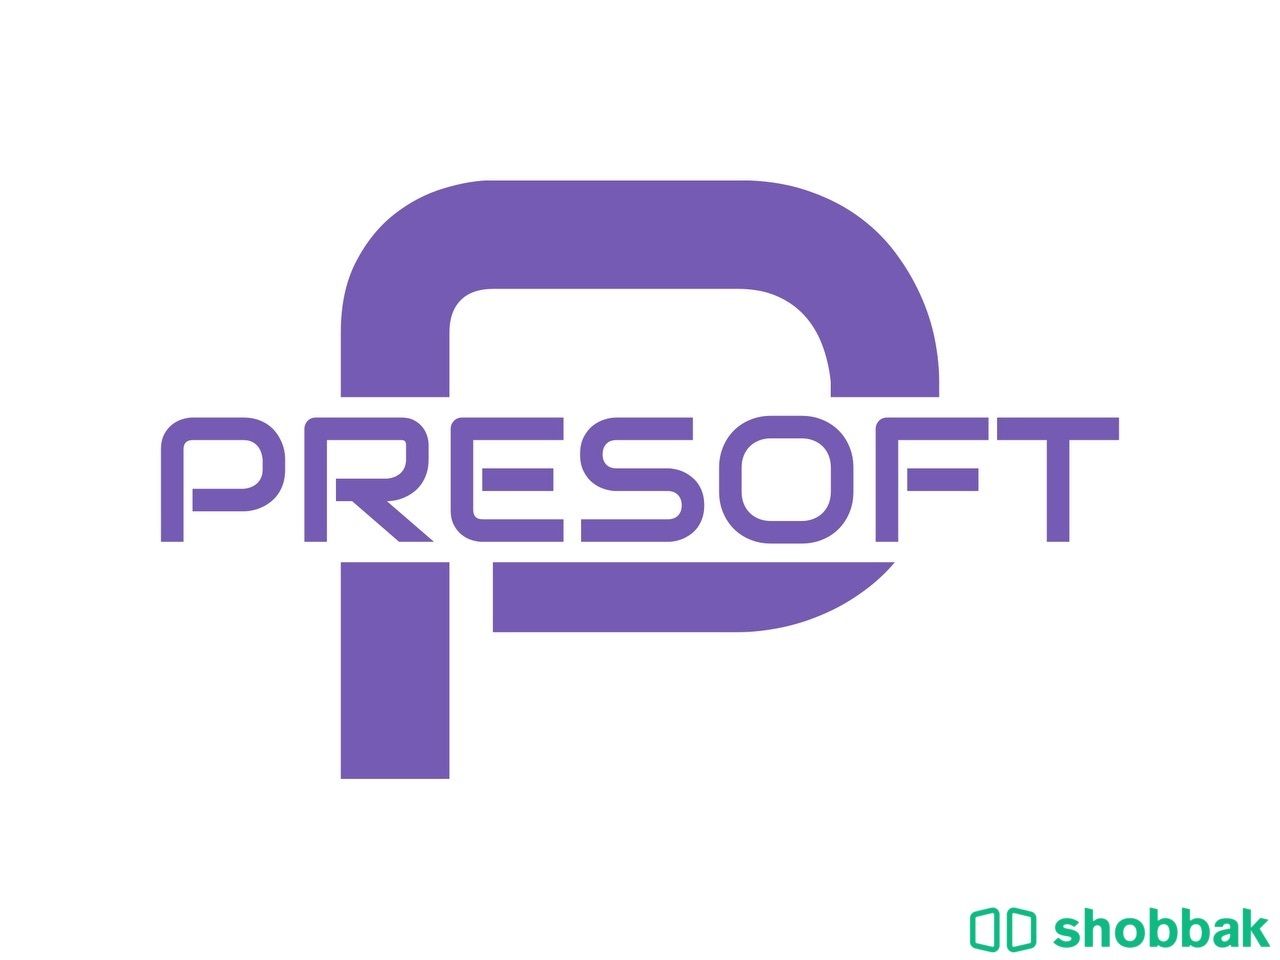 presoft لتصميم وبرمجة المواقع والمتاجر و التطبيقات الالكترونية Shobbak Saudi Arabia